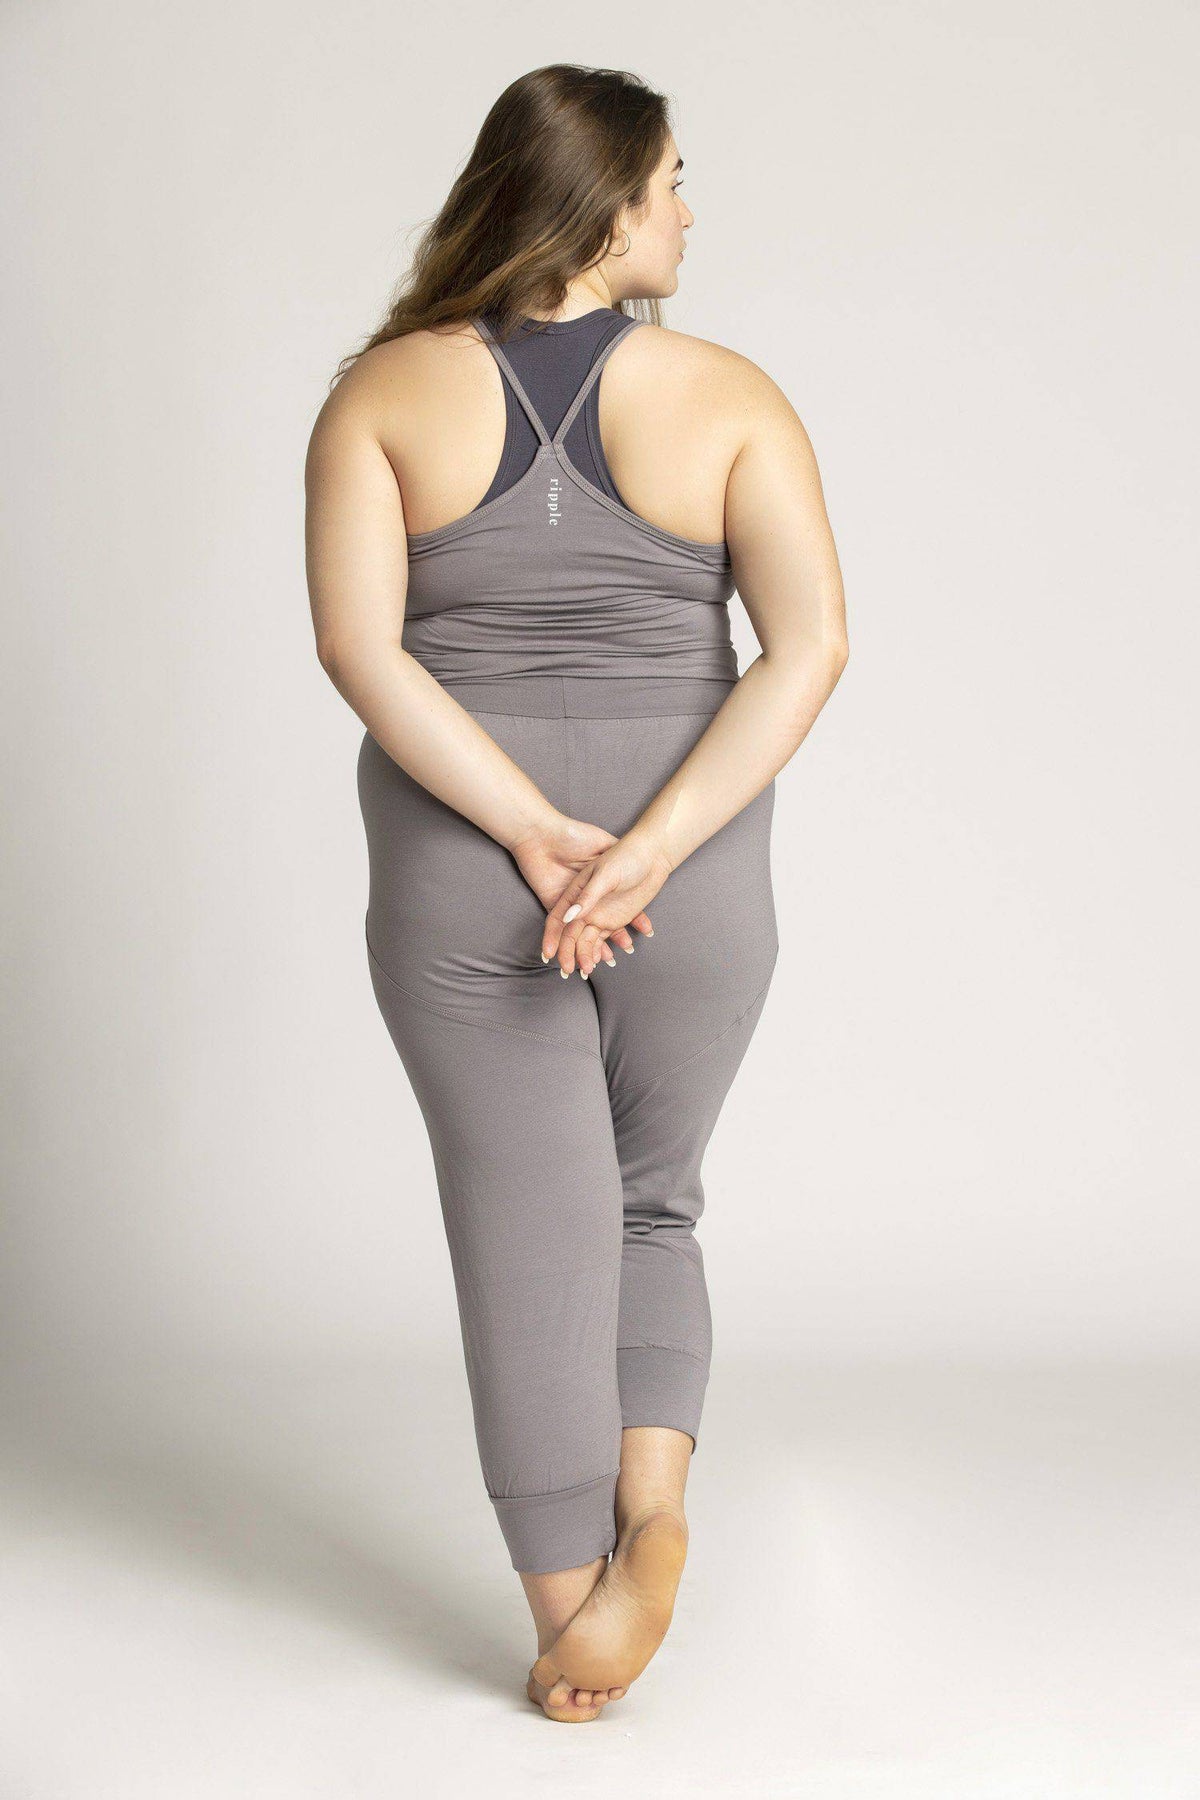 Yoga Jumpsuit - womens clothing - Ripple Yoga Wear